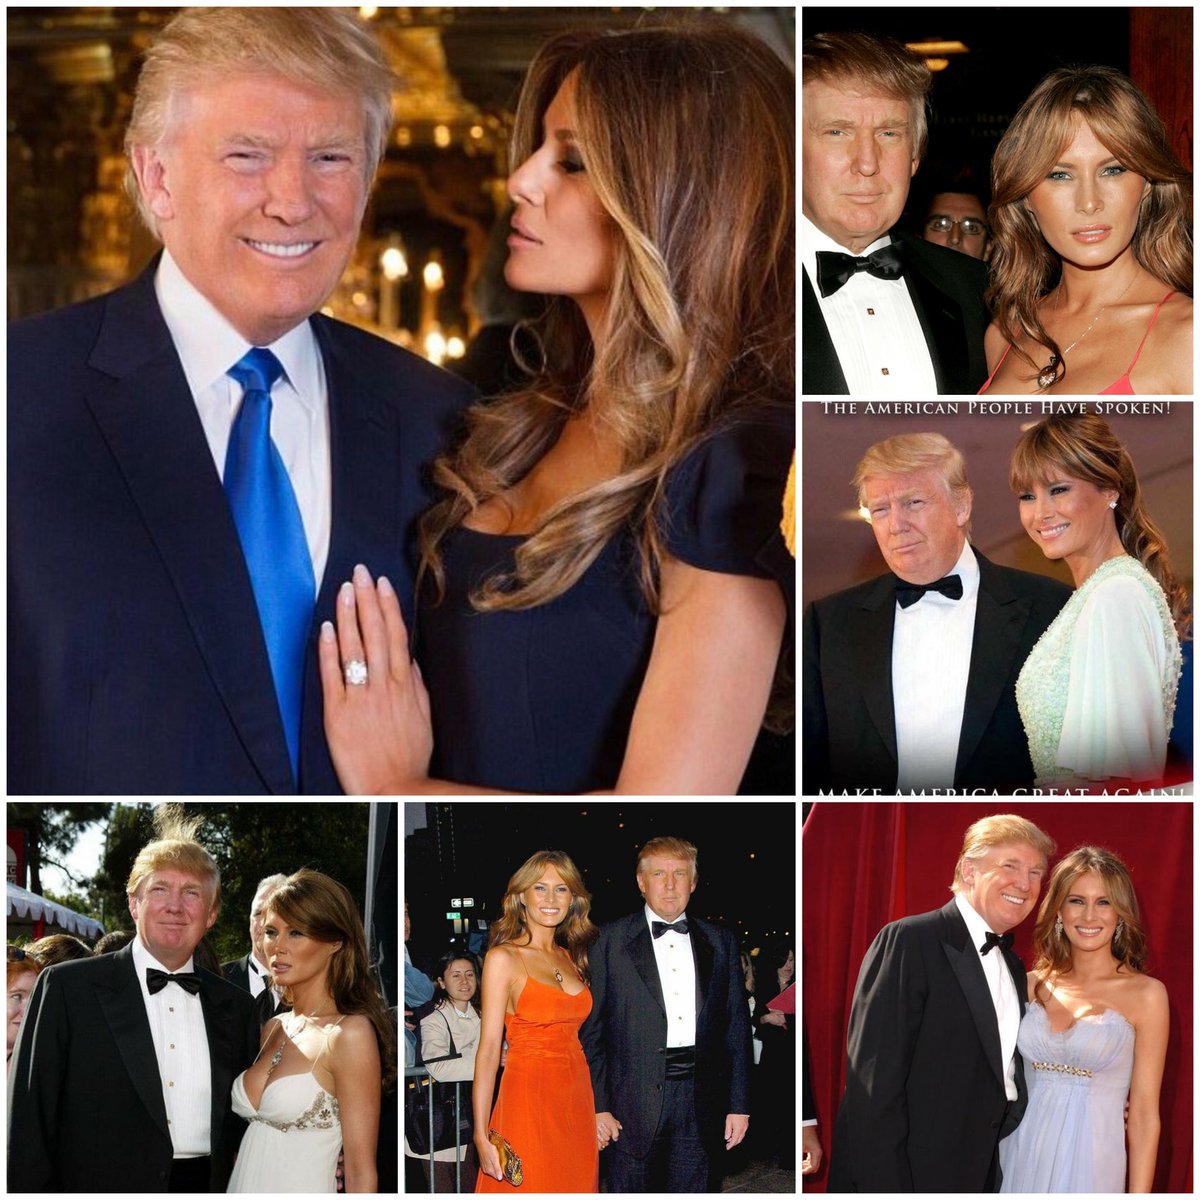 RT @JackMedia7: America's Greatest President Donald J Trump and Our Amazing First Lady Melania https://t.co/SCFz2RL4io